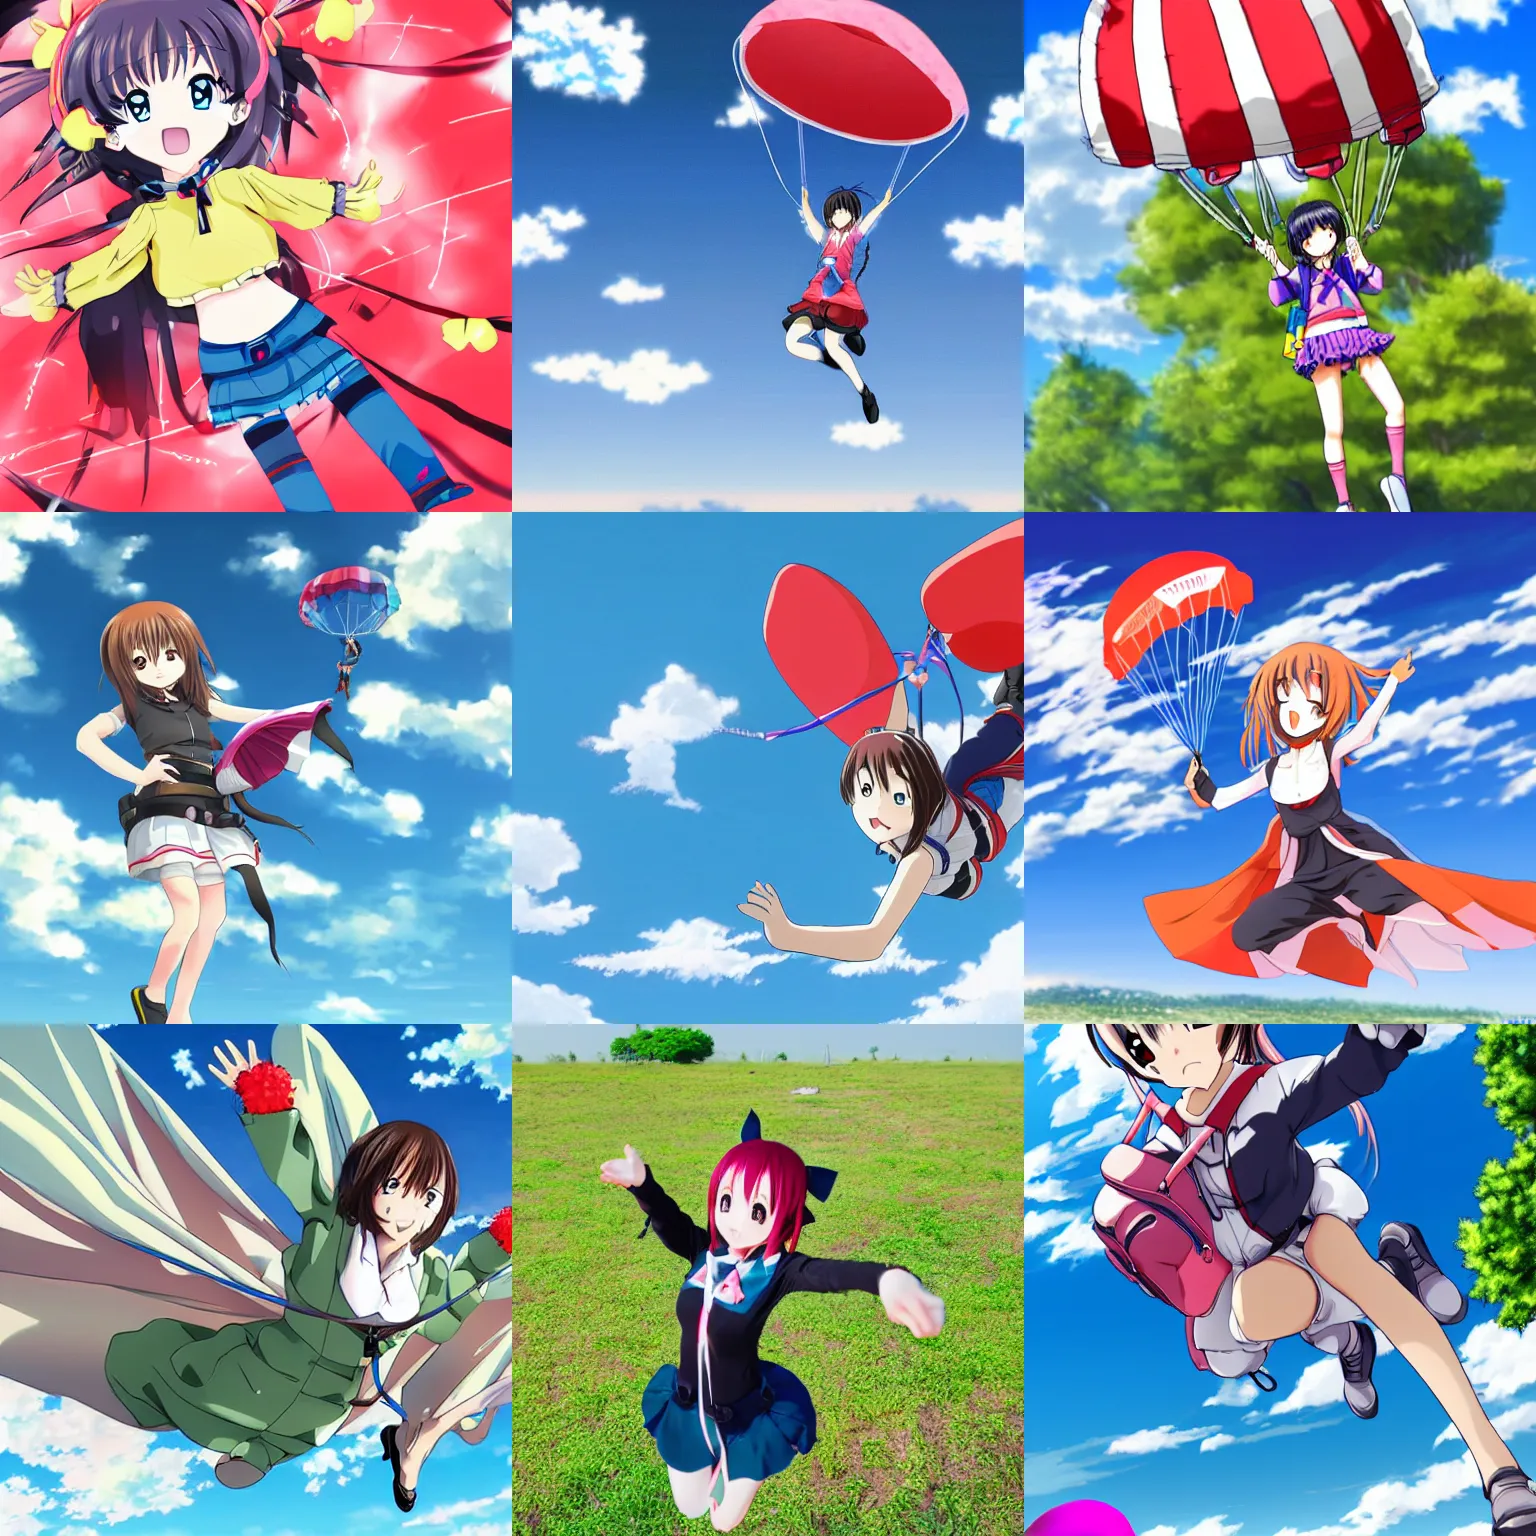 Prompt: anime girl parachuting